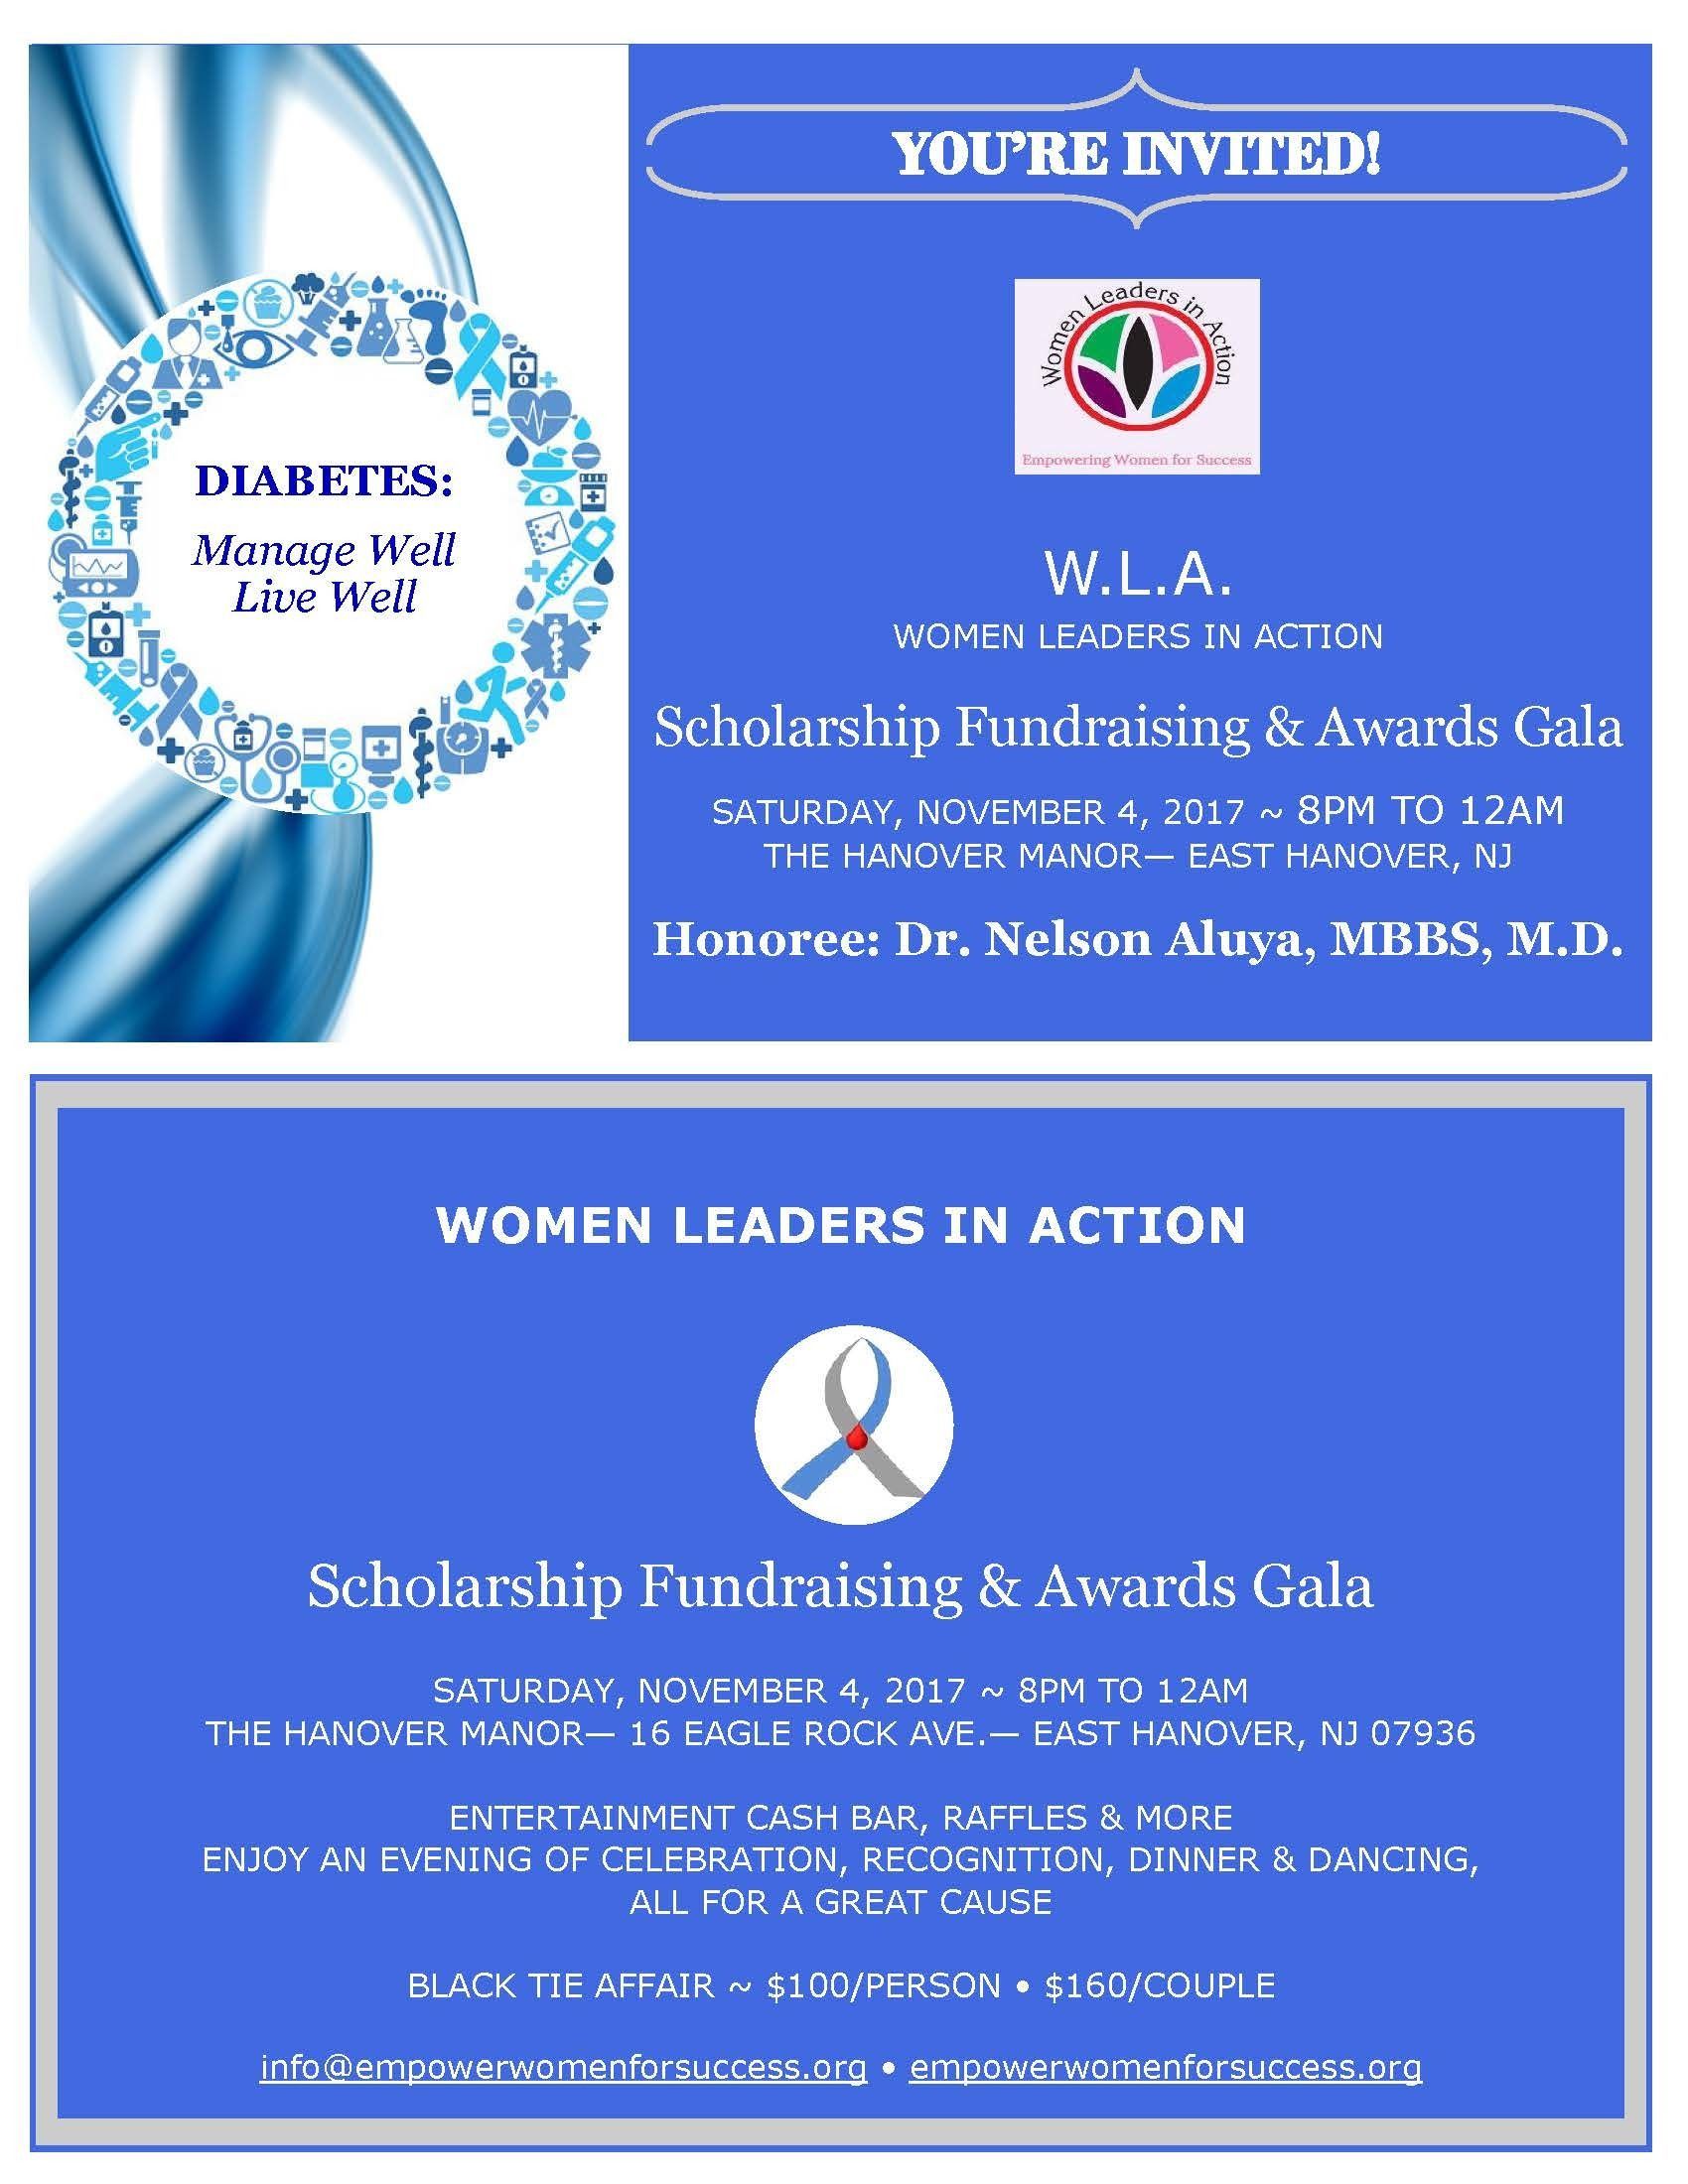 W.L.A. Scholarship Fundraising & Awards Gala